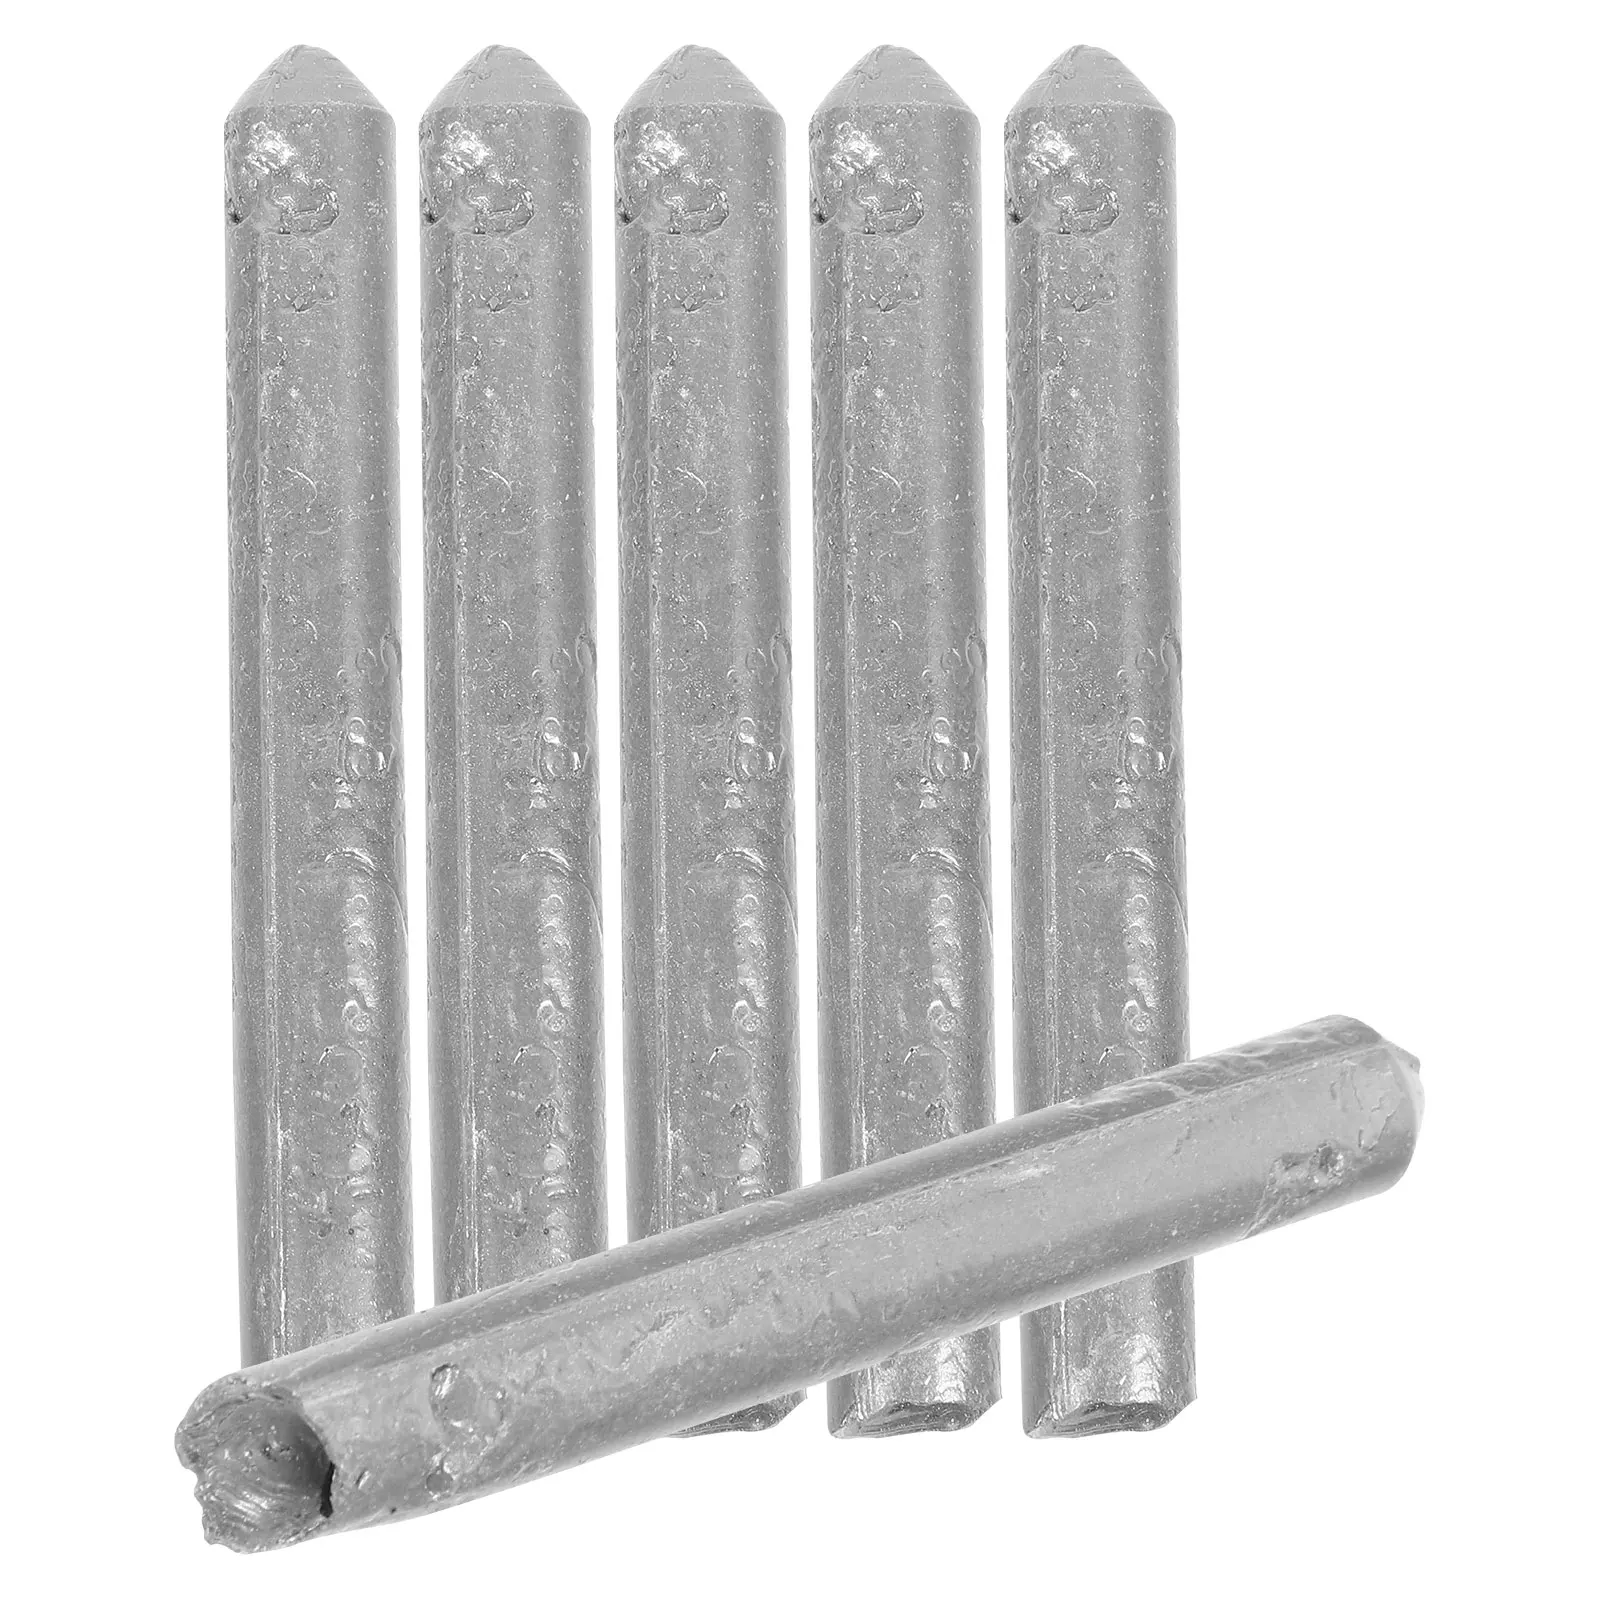 

6pcs Low Temperature Aluminum Welding Rods Universal Welding Sticks for Welding Alloy Steel Multipurpose Aluminum Rods